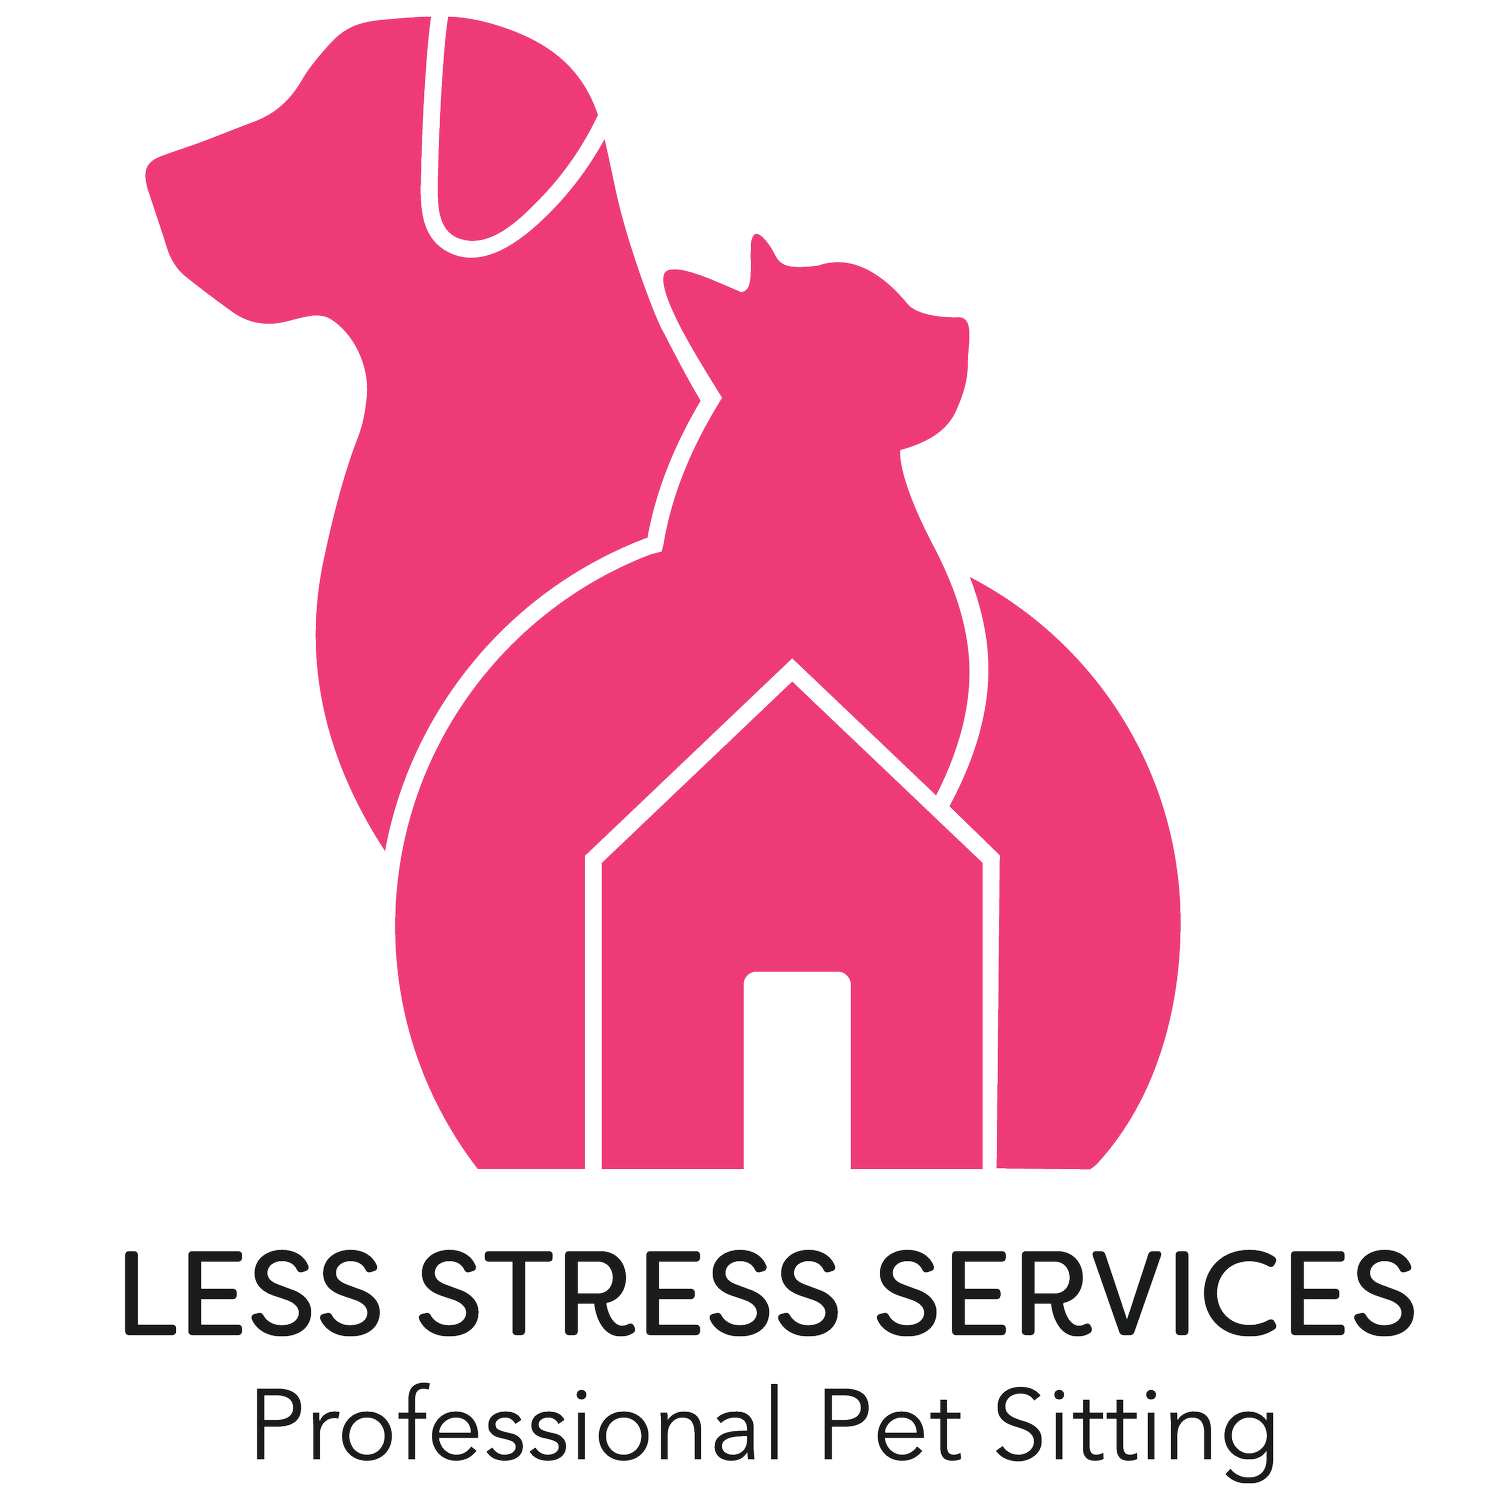 Less Stress Services, LLC (949) 445-6550